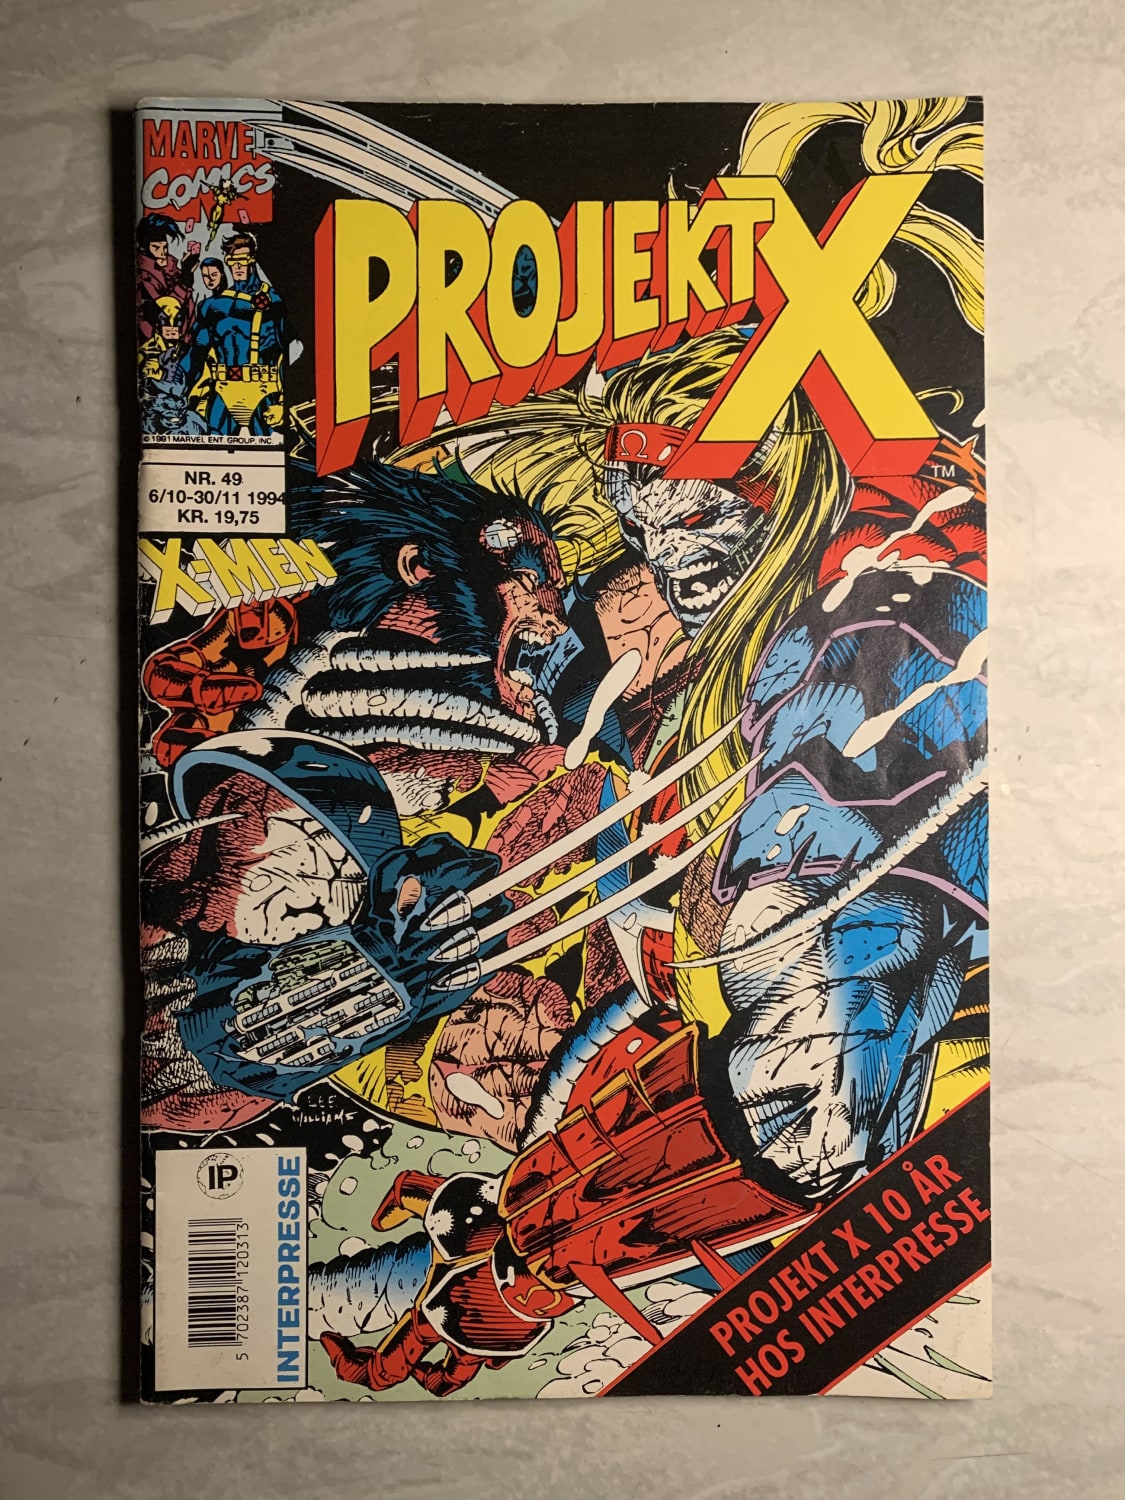 My favorite cover (Projekt X #49 - Interpresse, Denmark 1991)